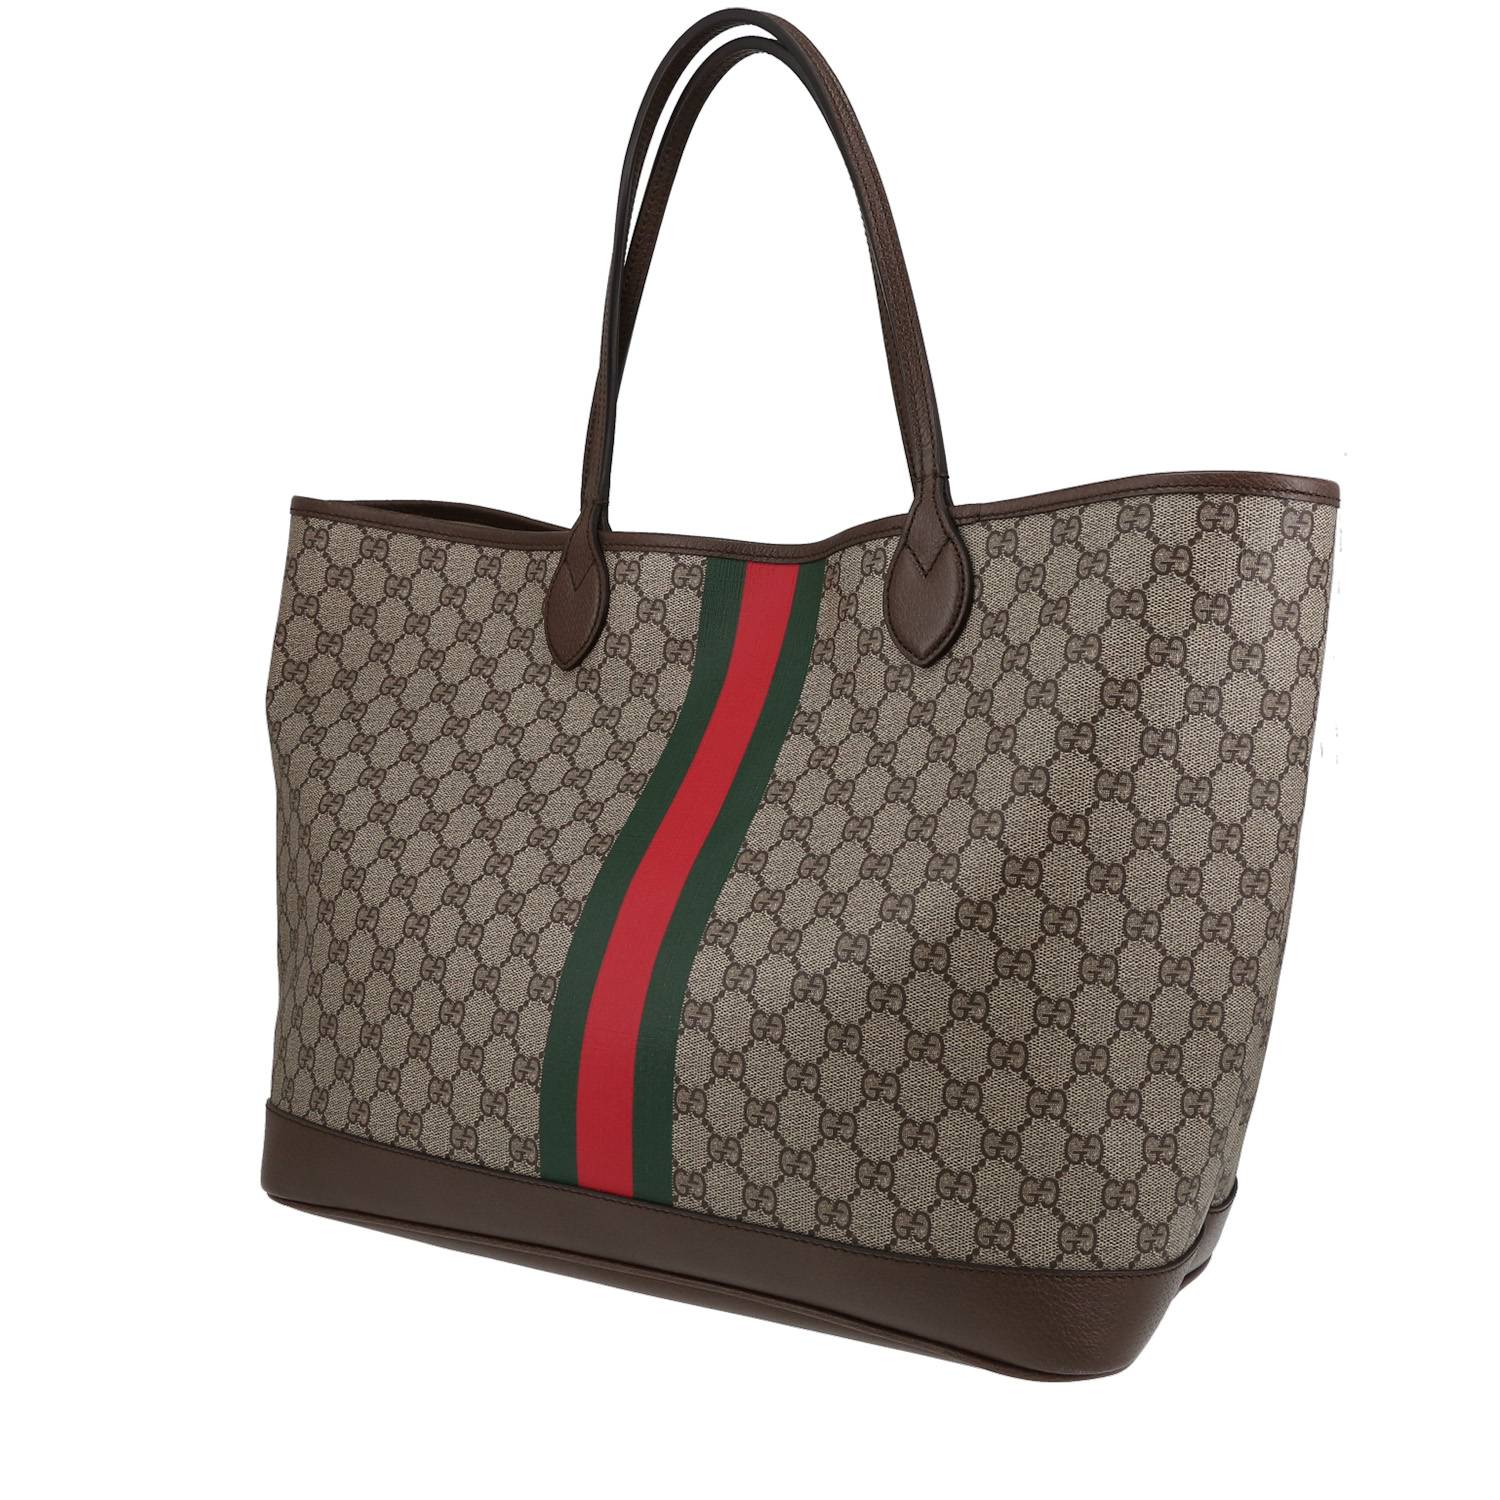 Gucci GG Supreme Tote bags & Shoppers - Women